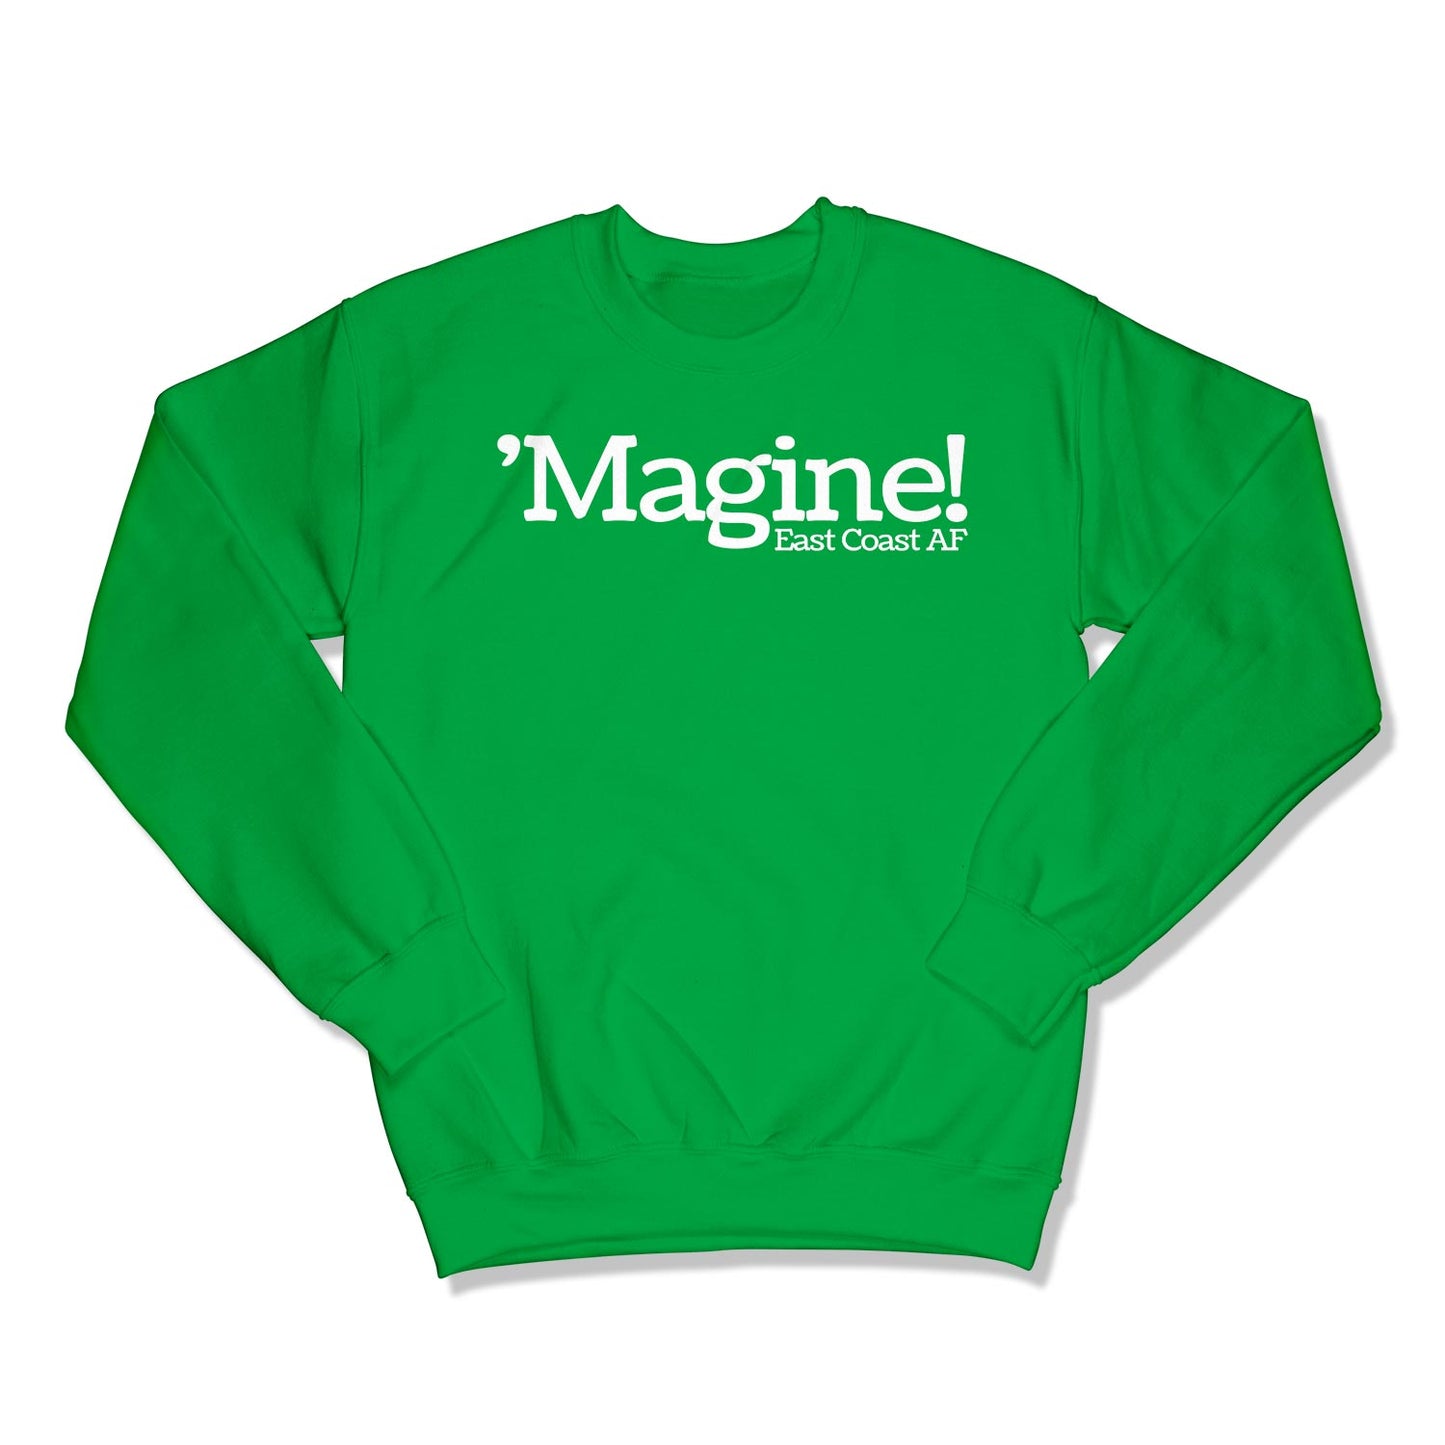 'Magine! Unisex Crewneck Sweatshirt in Color: Irish Green - East Coast AF Apparel